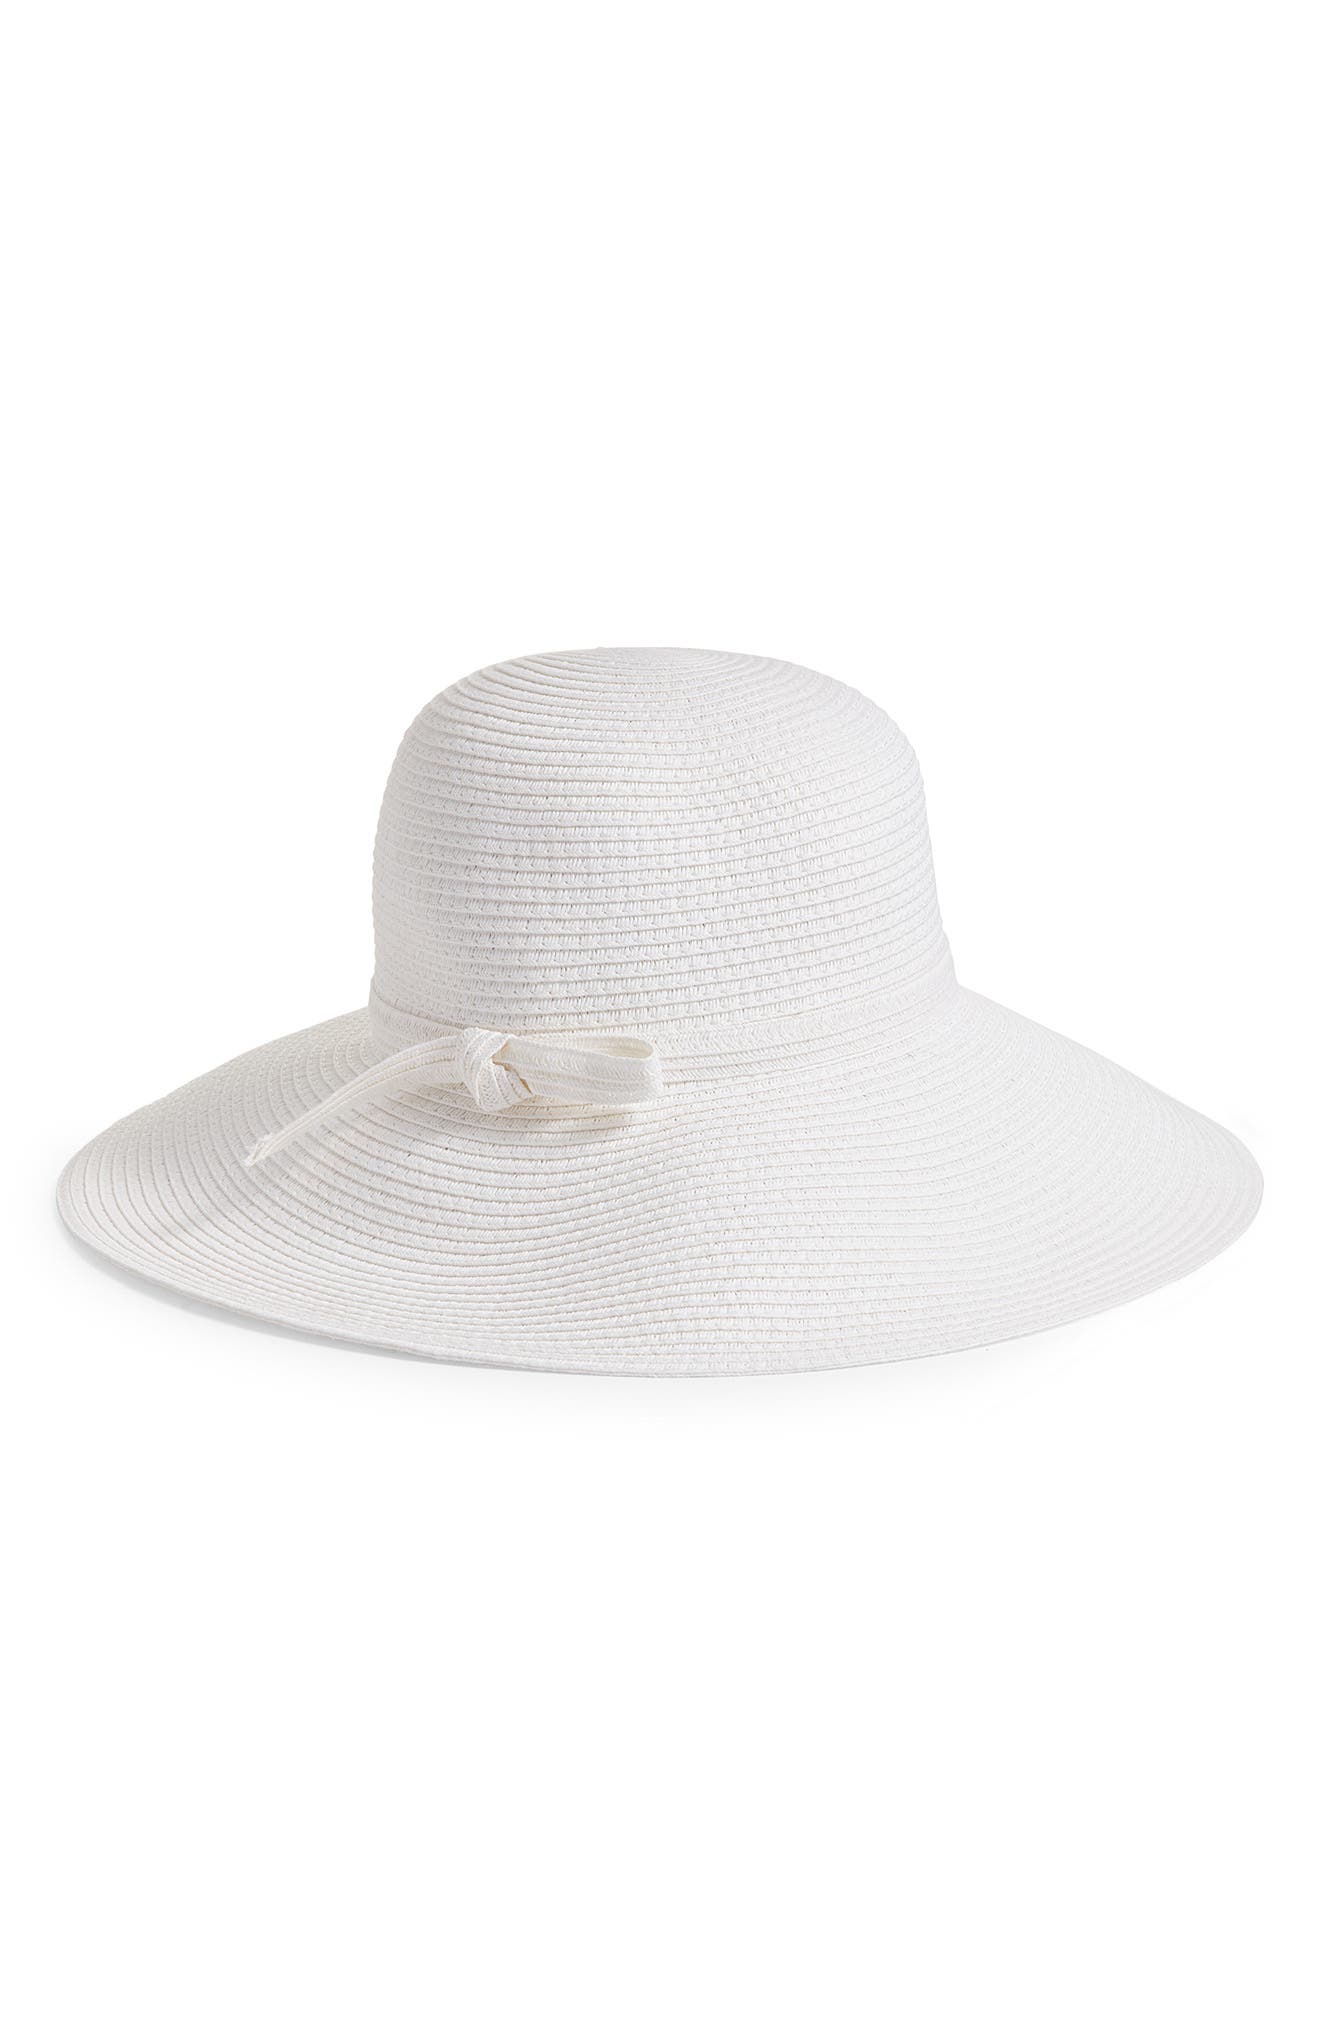 HT1603 Women Men Fedoras Summer Wide Brim Sun Hat Breathable Mesh Cap Hat with B